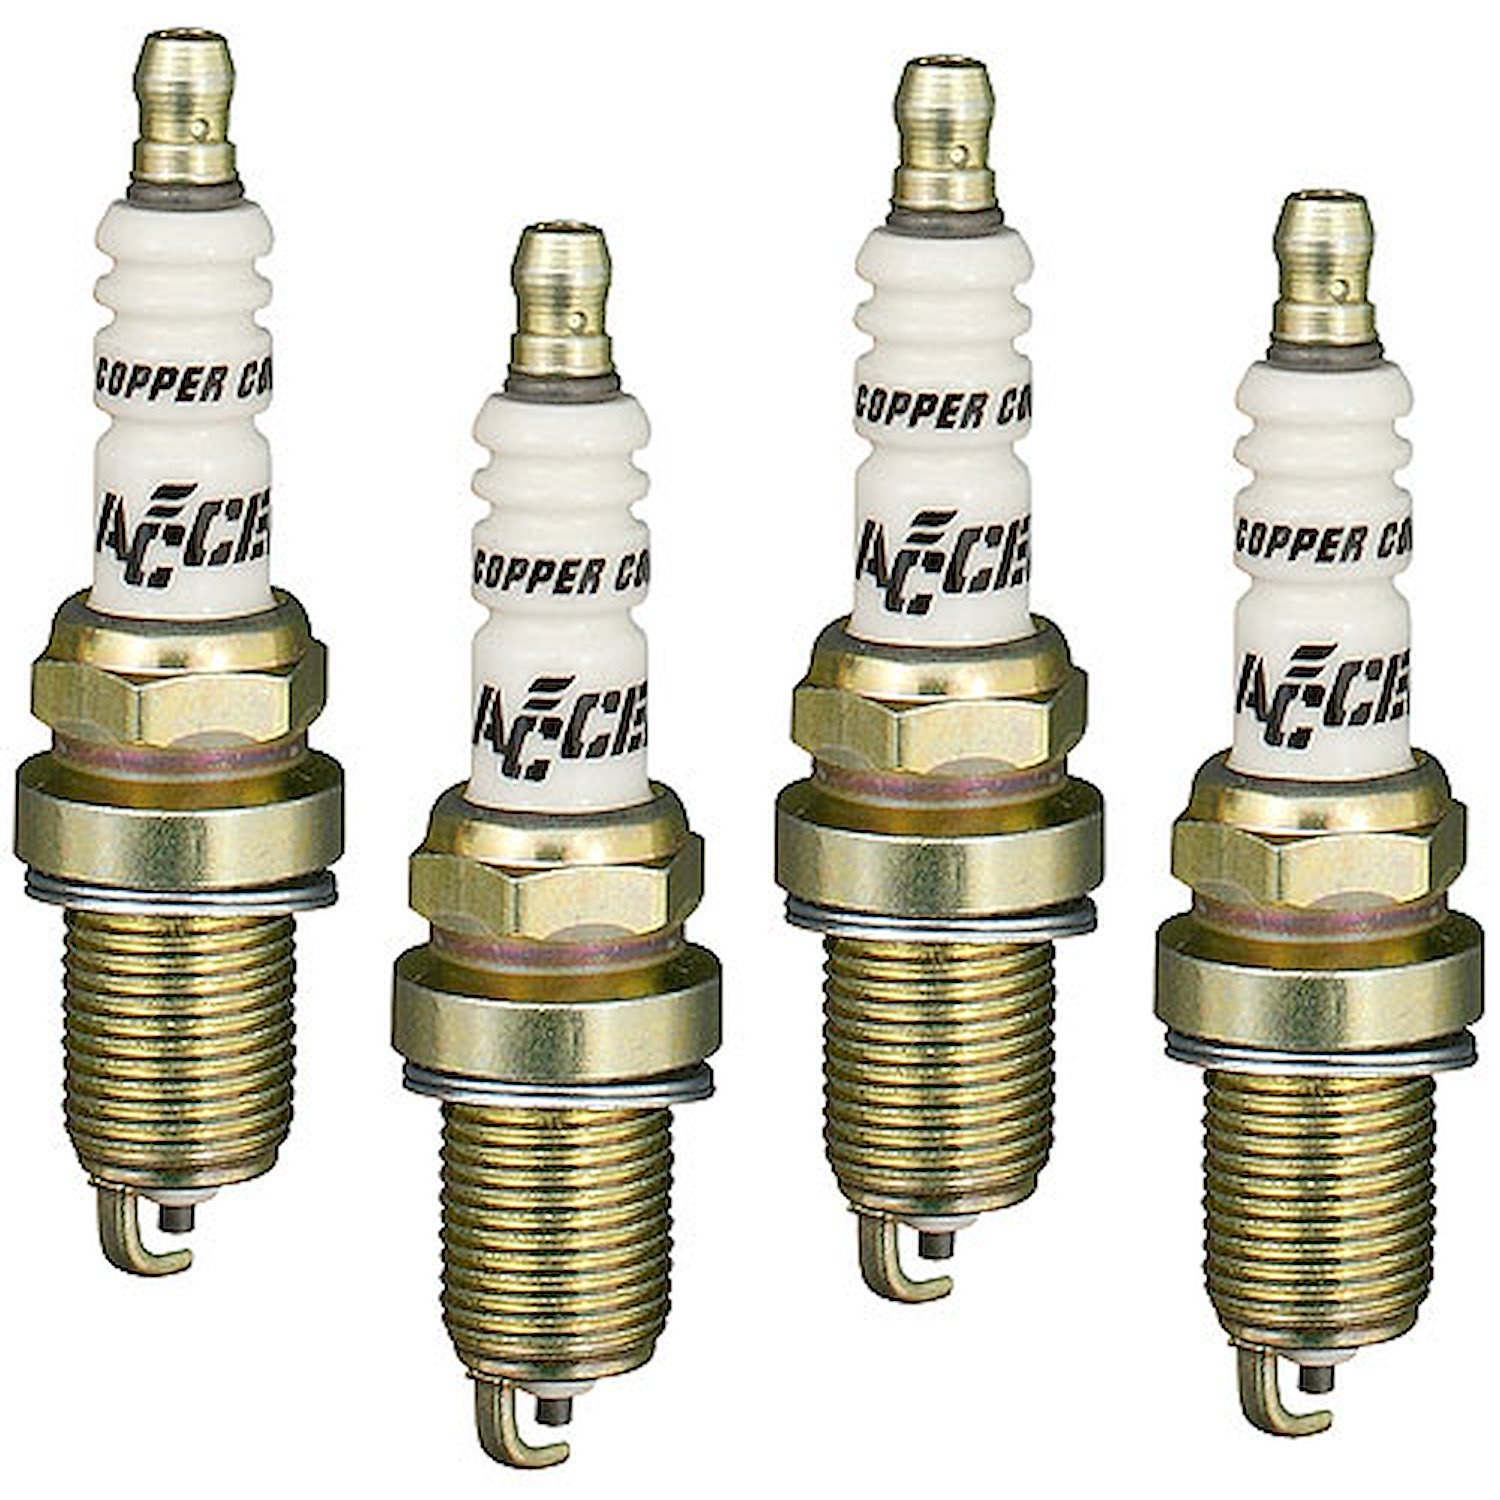 0416S-4 Copper Core Spark Plugs Shorty Design